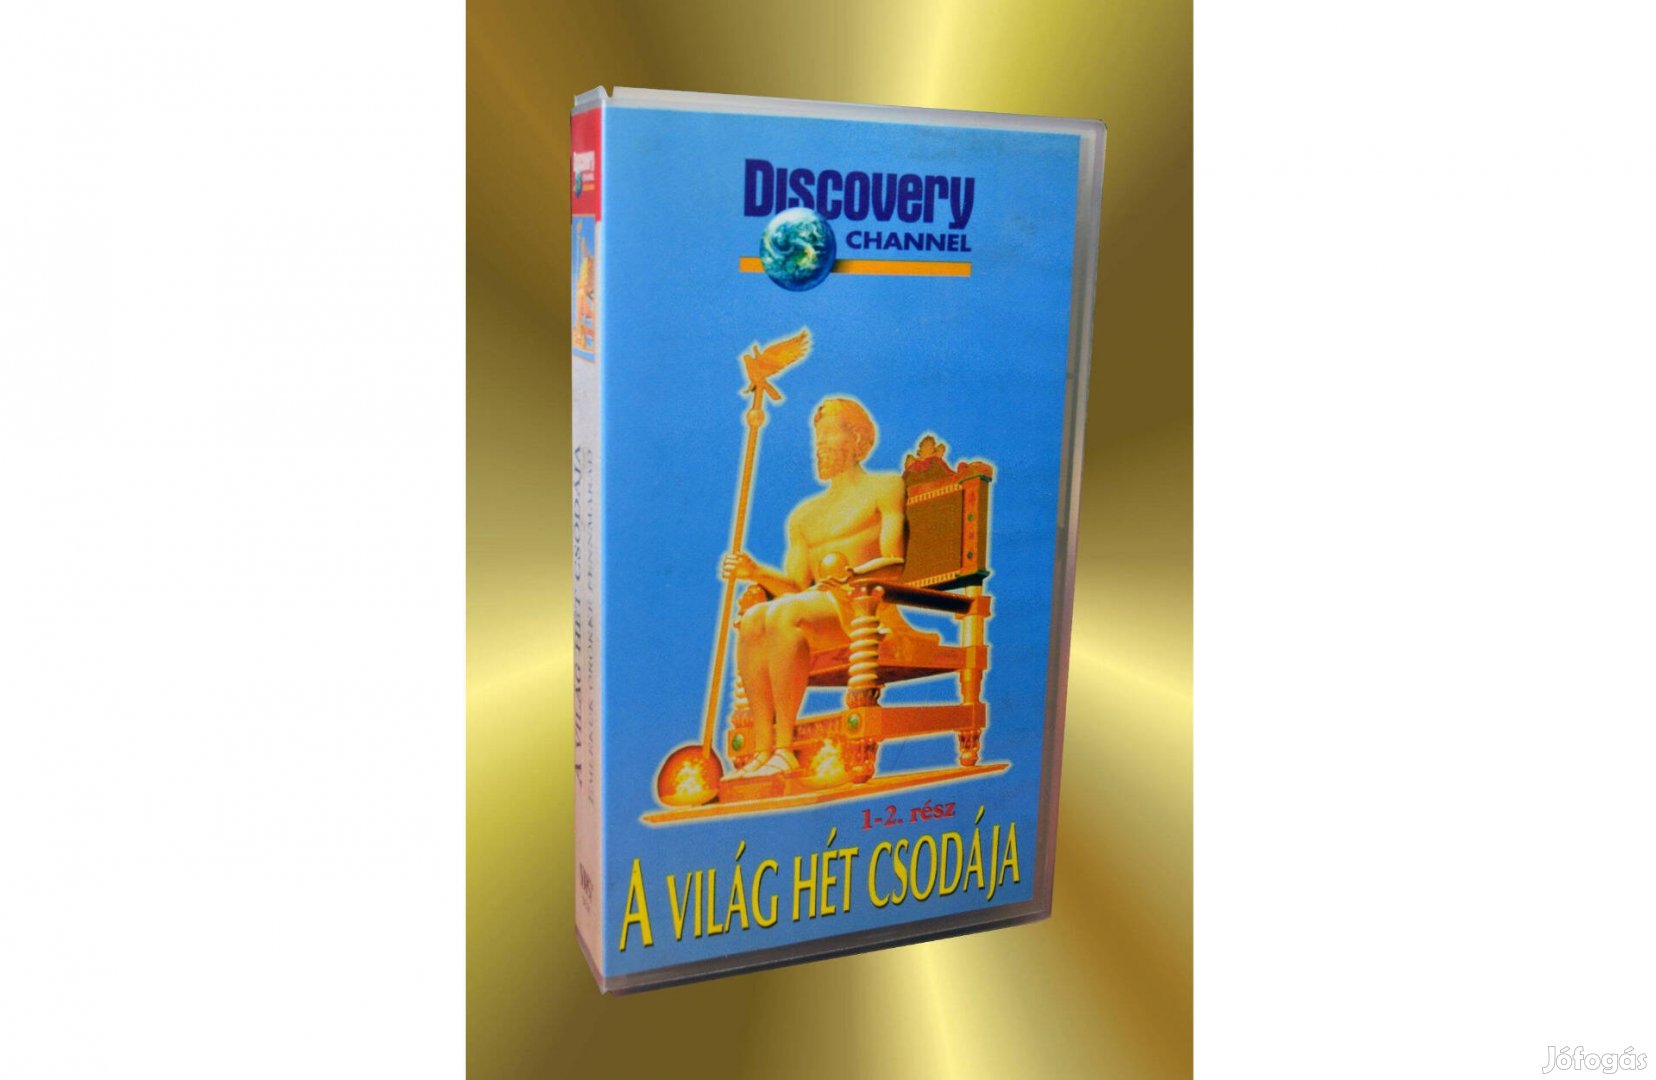 Discovery filmek / VHS /